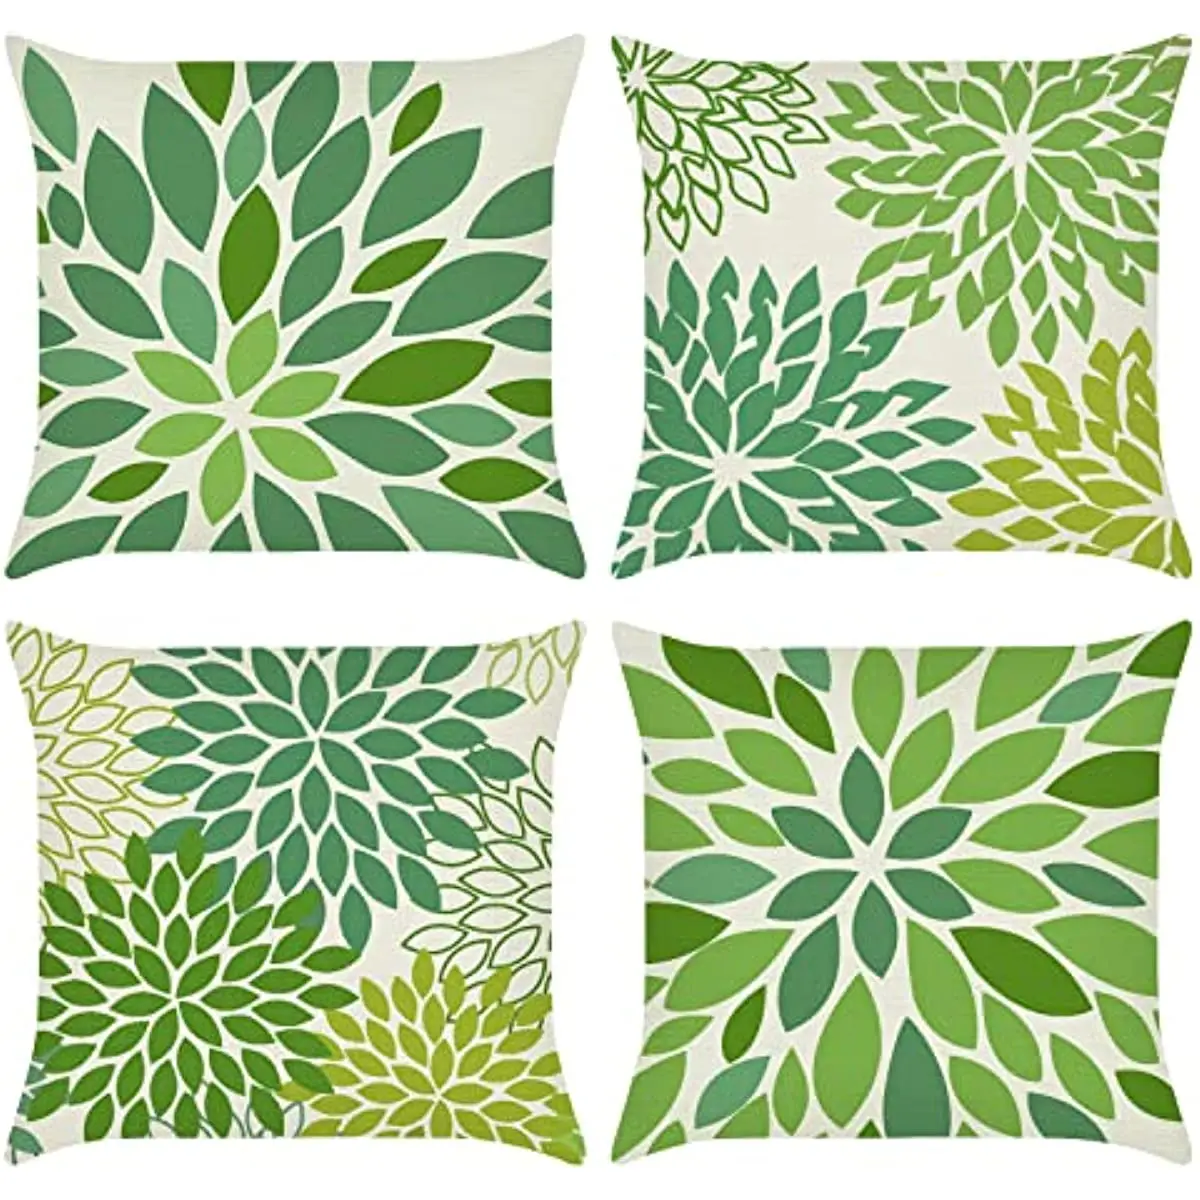 

Dahlia Pinnata Flower Throw Pillow Covers 18 x 18 Inch Set of 4 Green Geometric Floral Decorative Throw Pillow Cases Linen